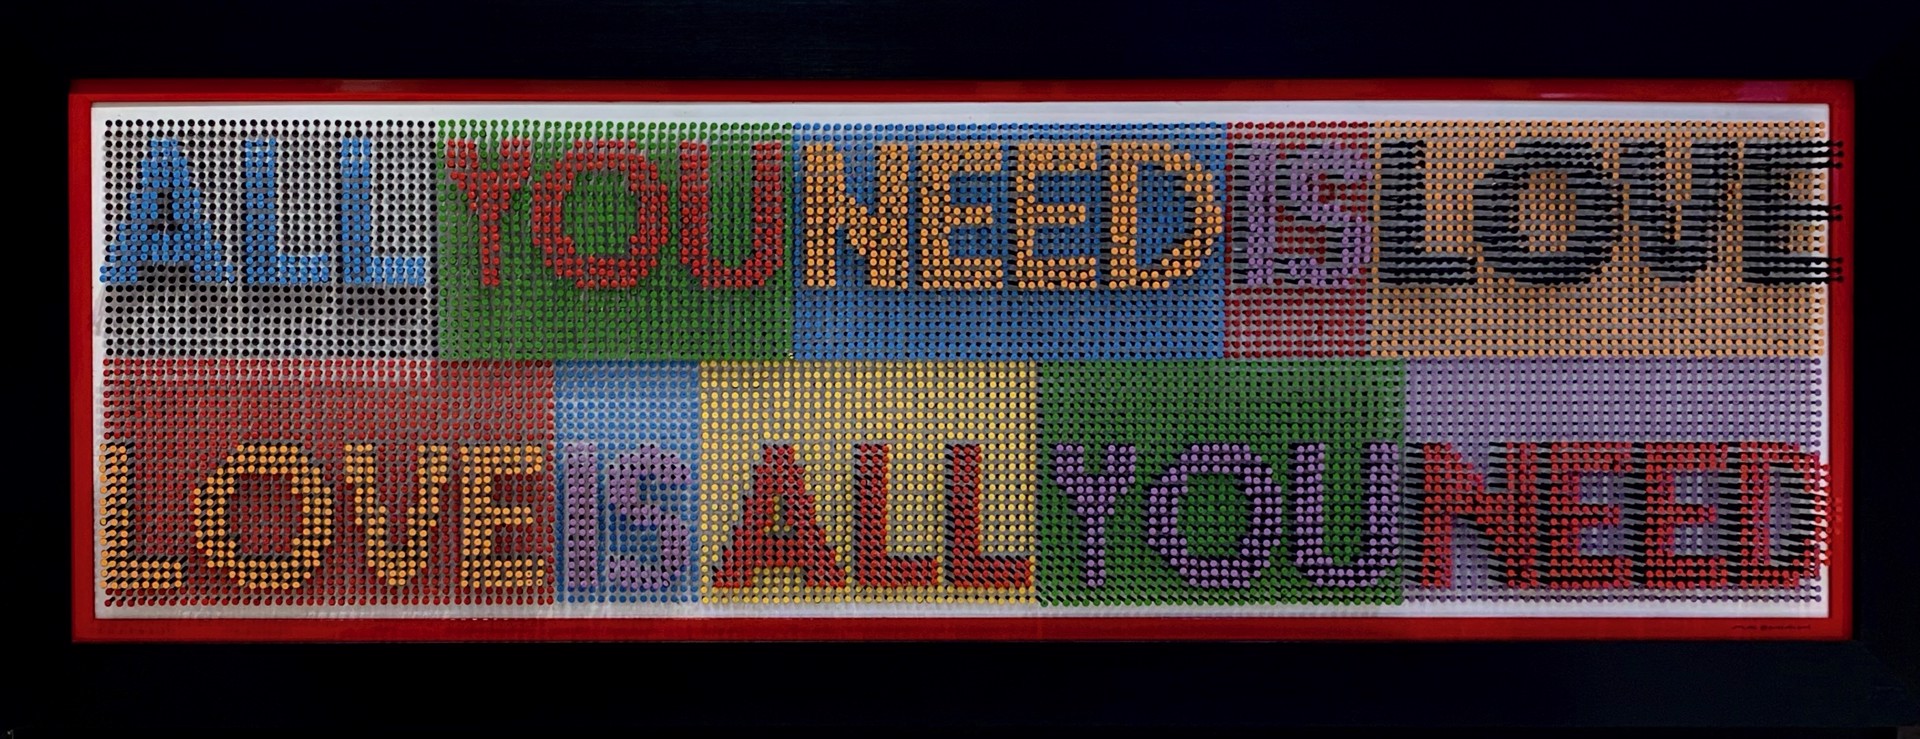 "All You Need Is Love" by "Screw Art Board" by Efi Mashiah